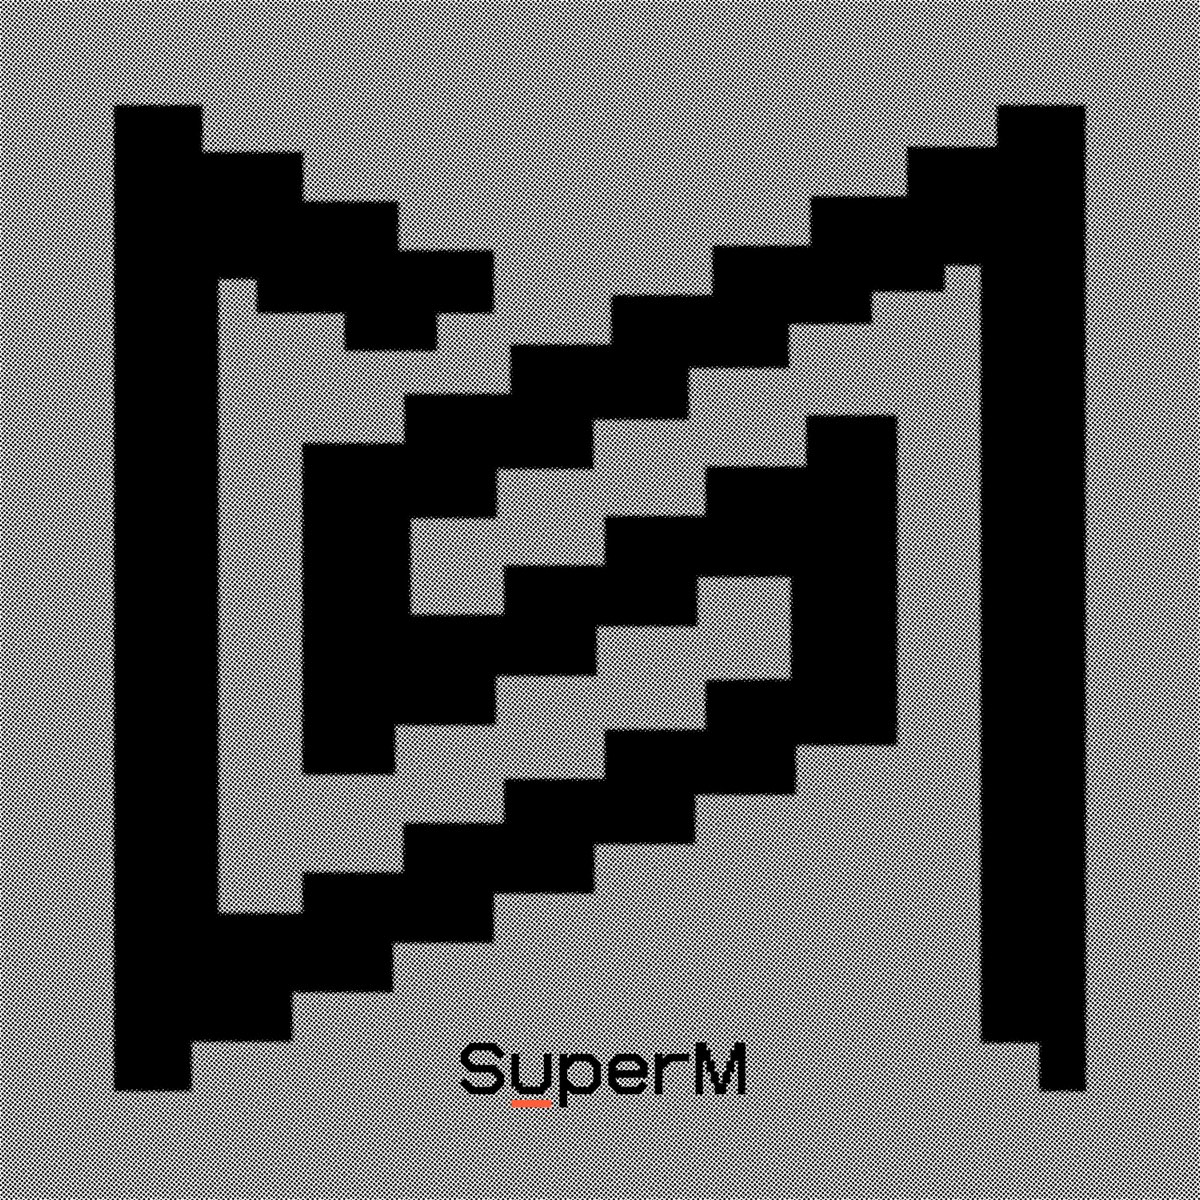 SuperM — Better Days cover artwork